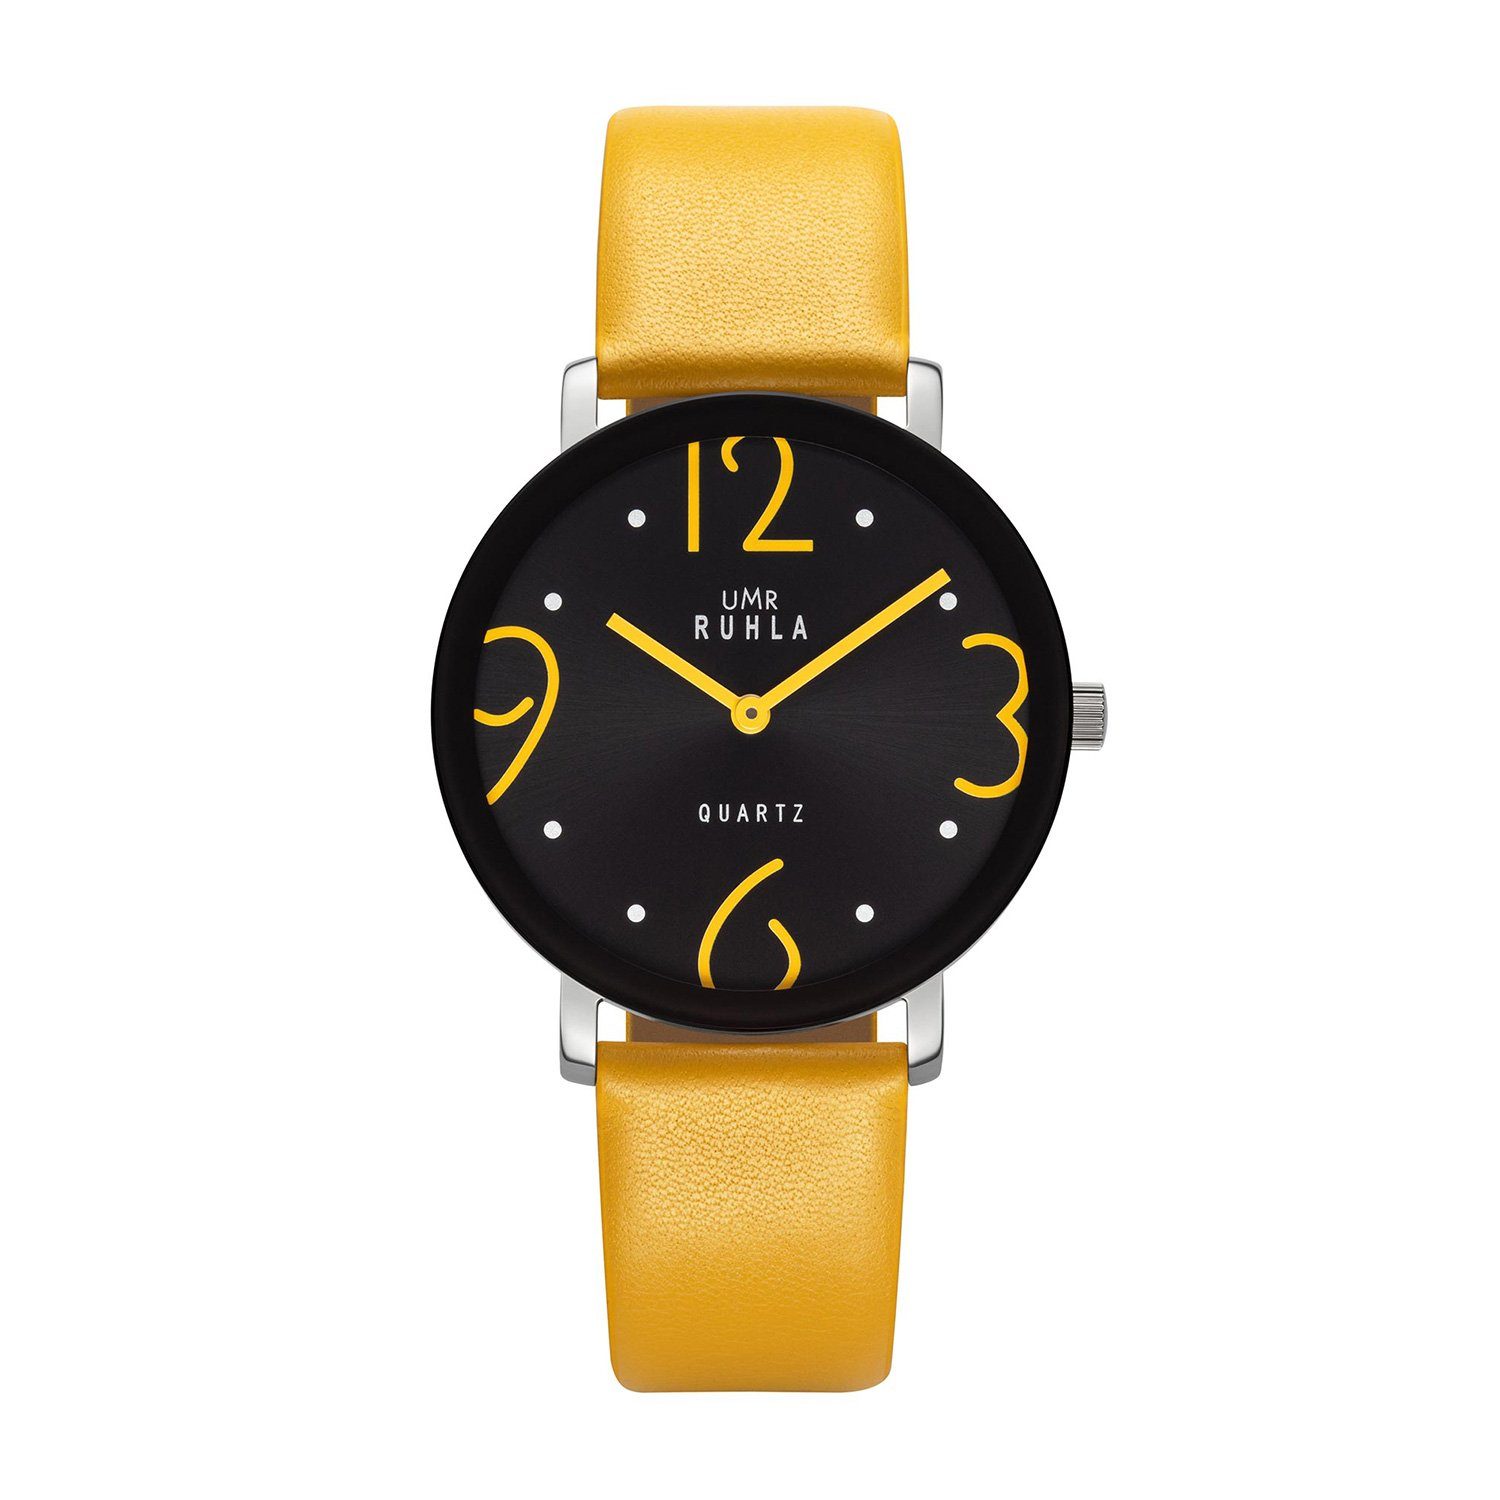 Manufaktur Uhren Ruhla - Quarz-Armbanduhr UMR Quarzuhr gelb - Lederband Ruhla